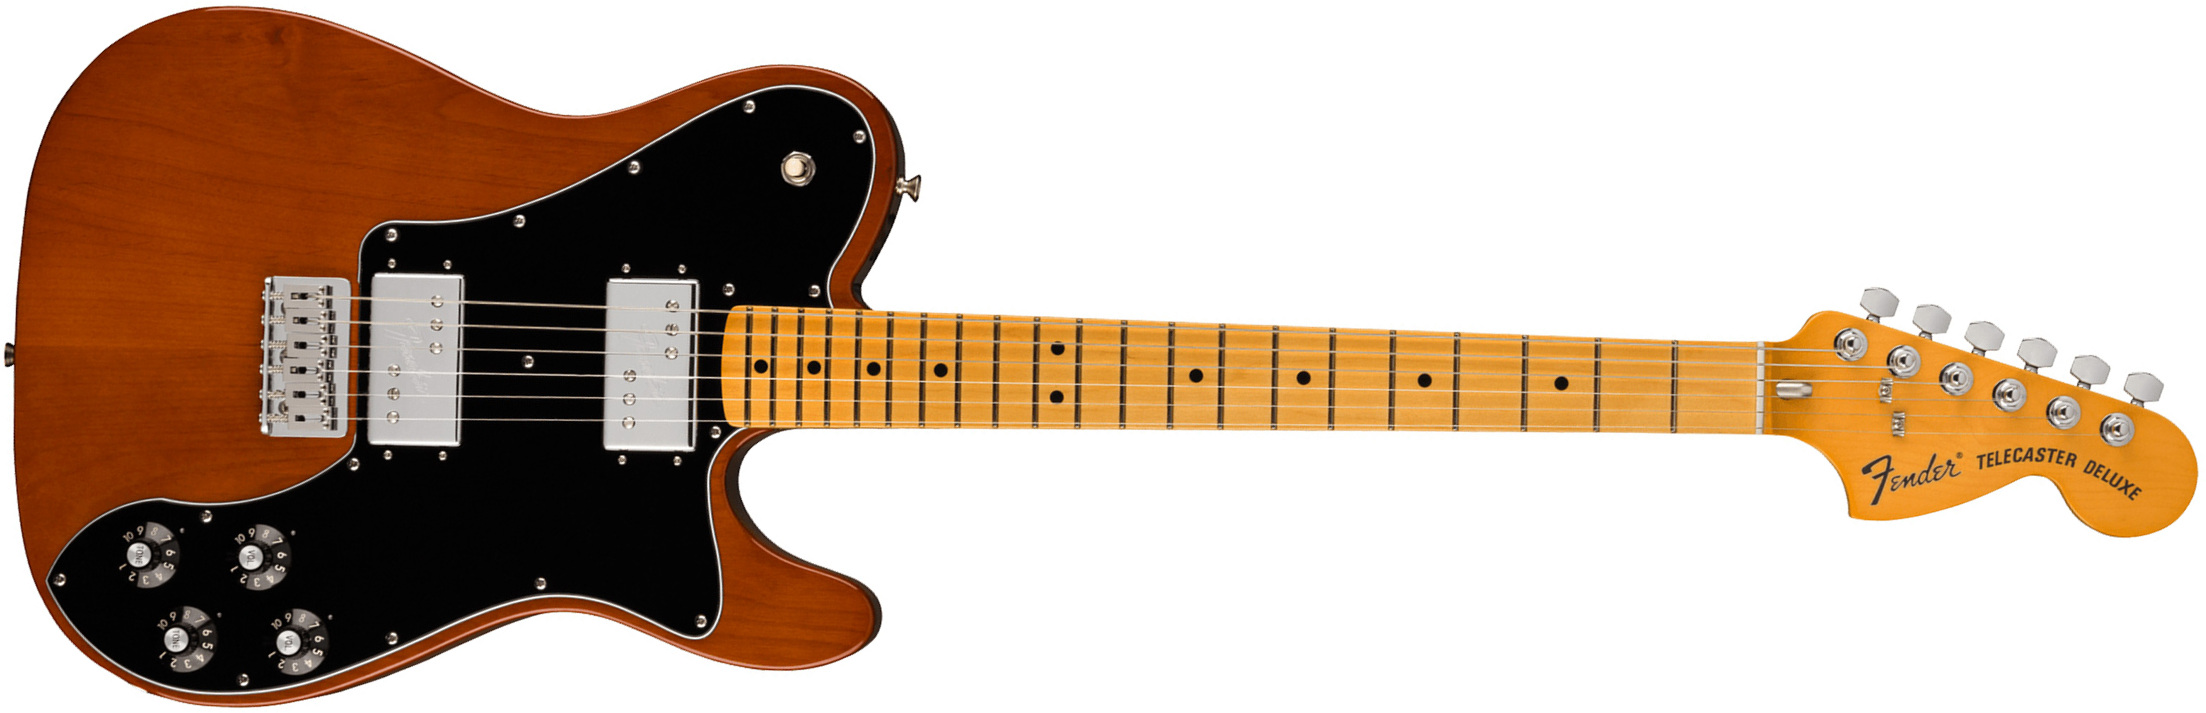 Fender Tele Deluxe 1975 American Vintage Ii Usa 2h Ht Mn - Mocha - Televorm elektrische gitaar - Main picture